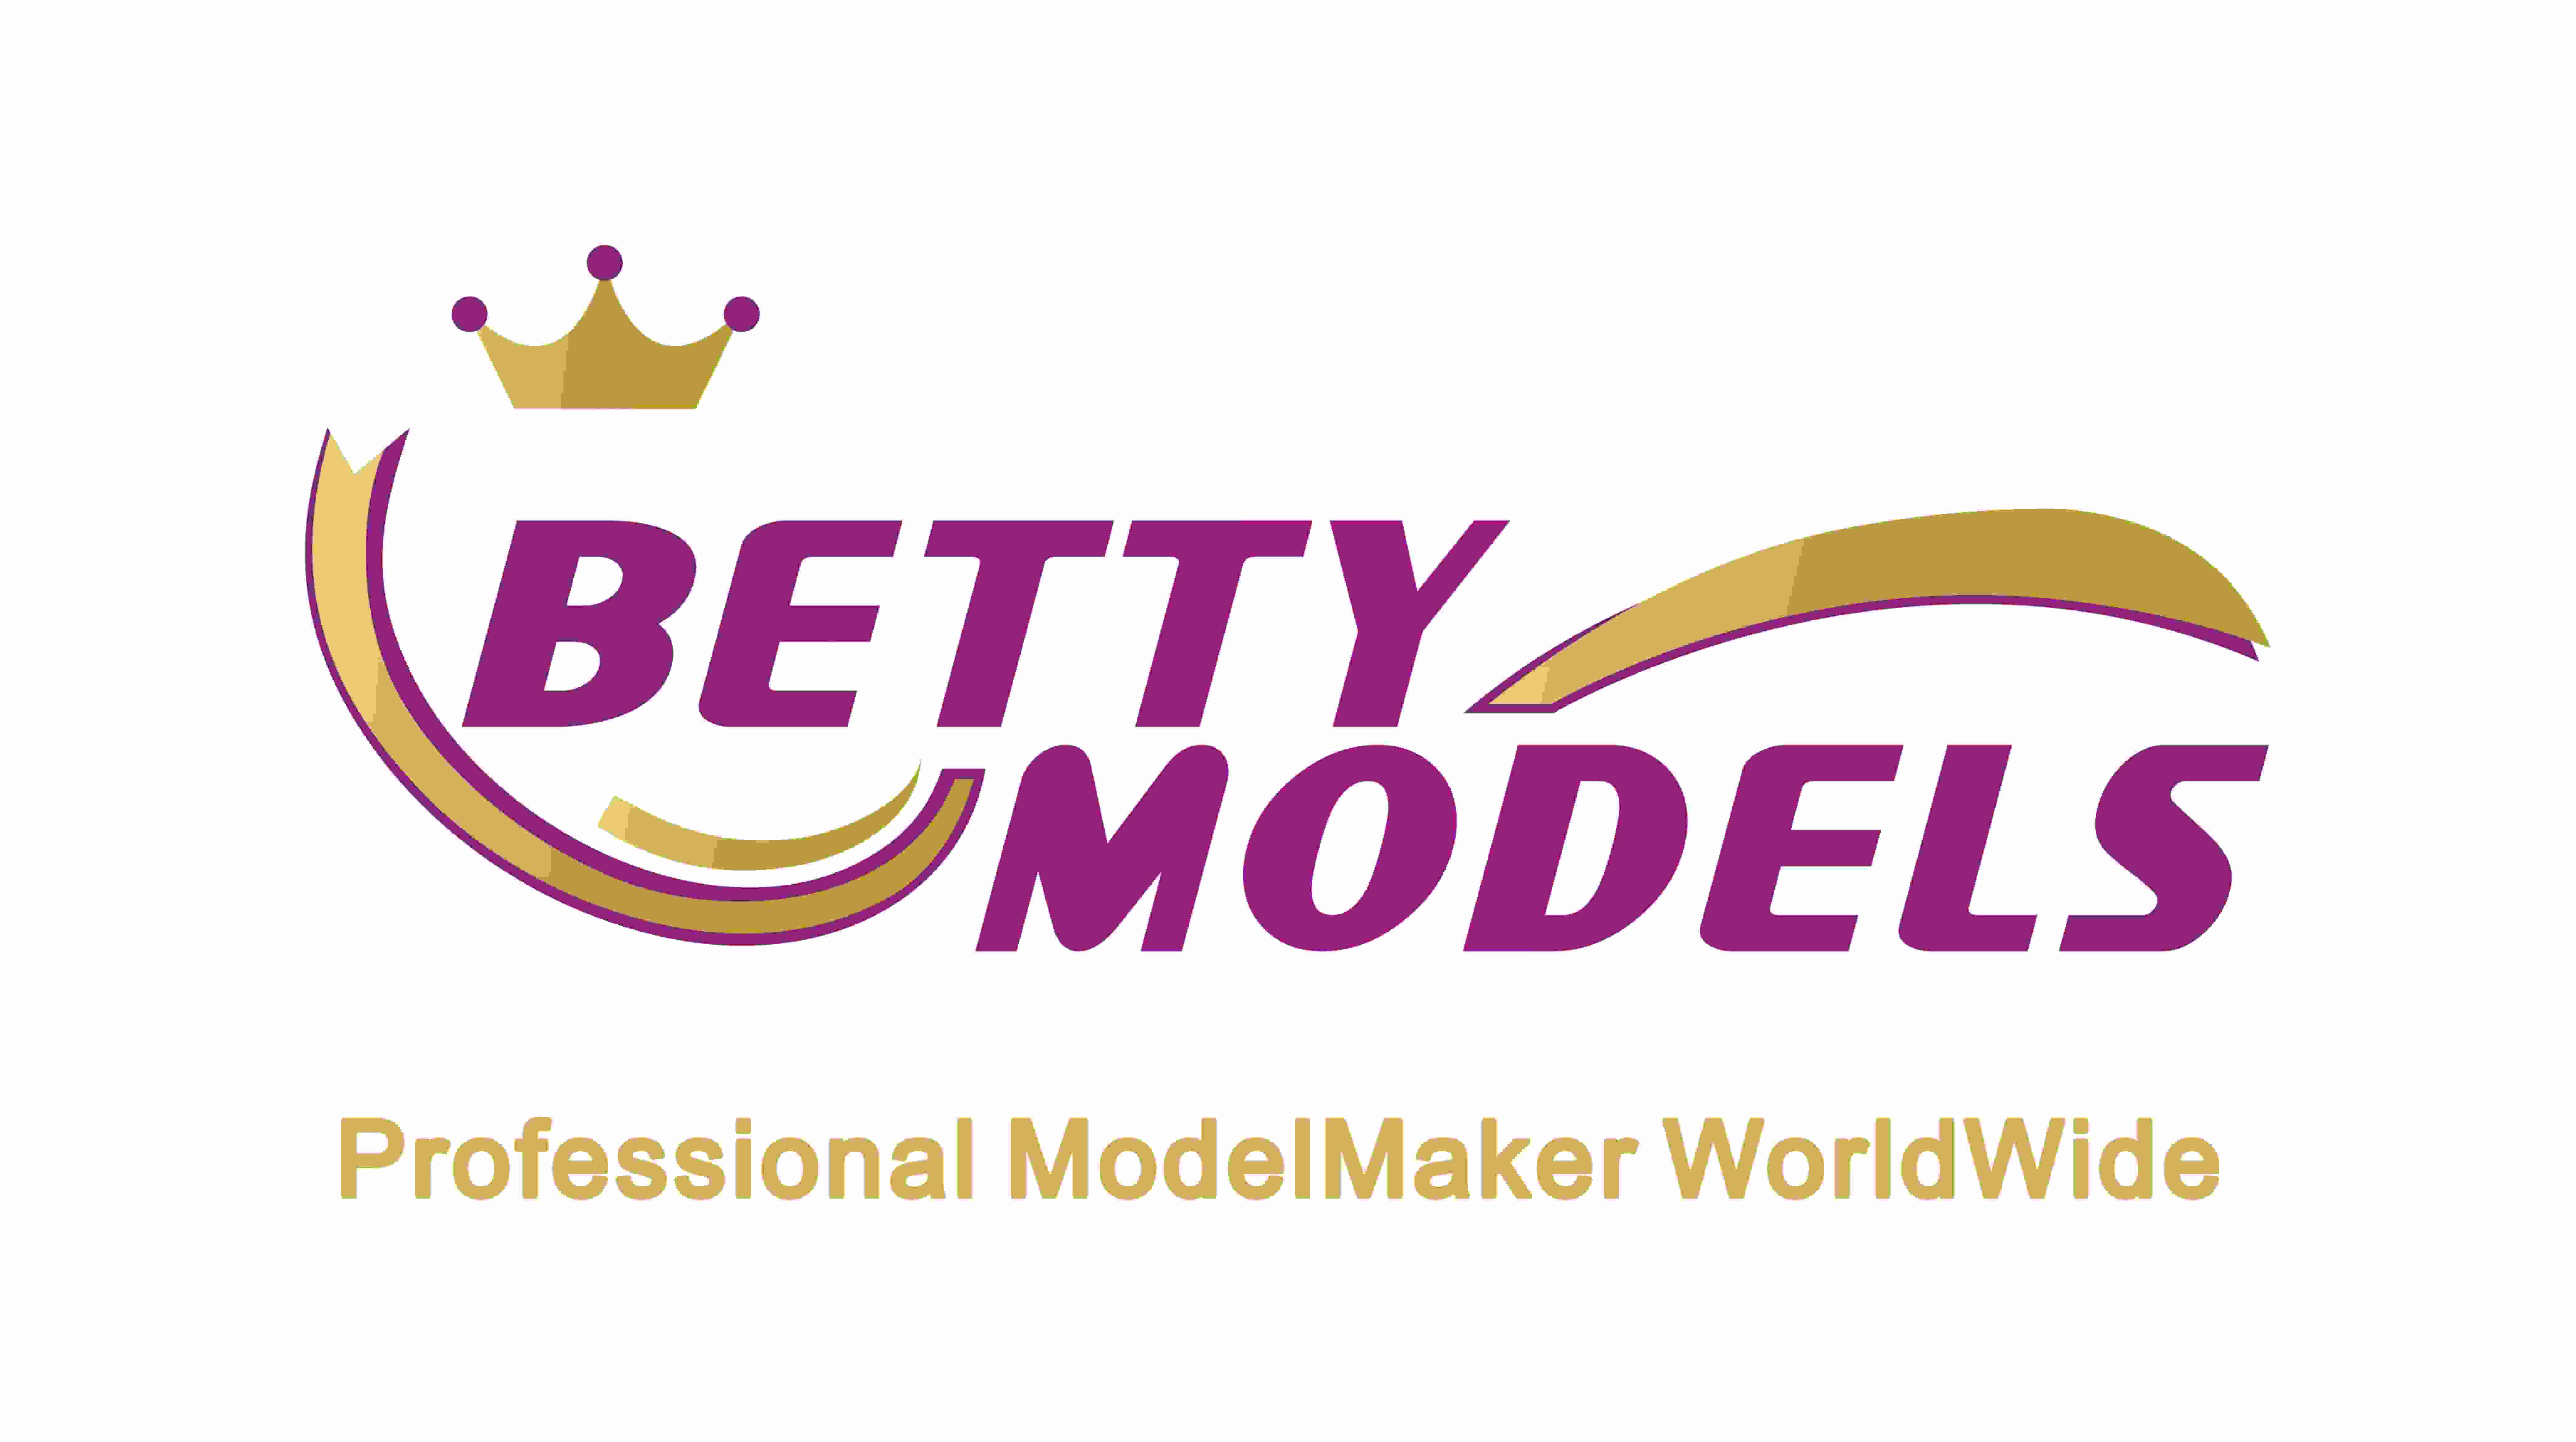 Betty Models logo change into new logo